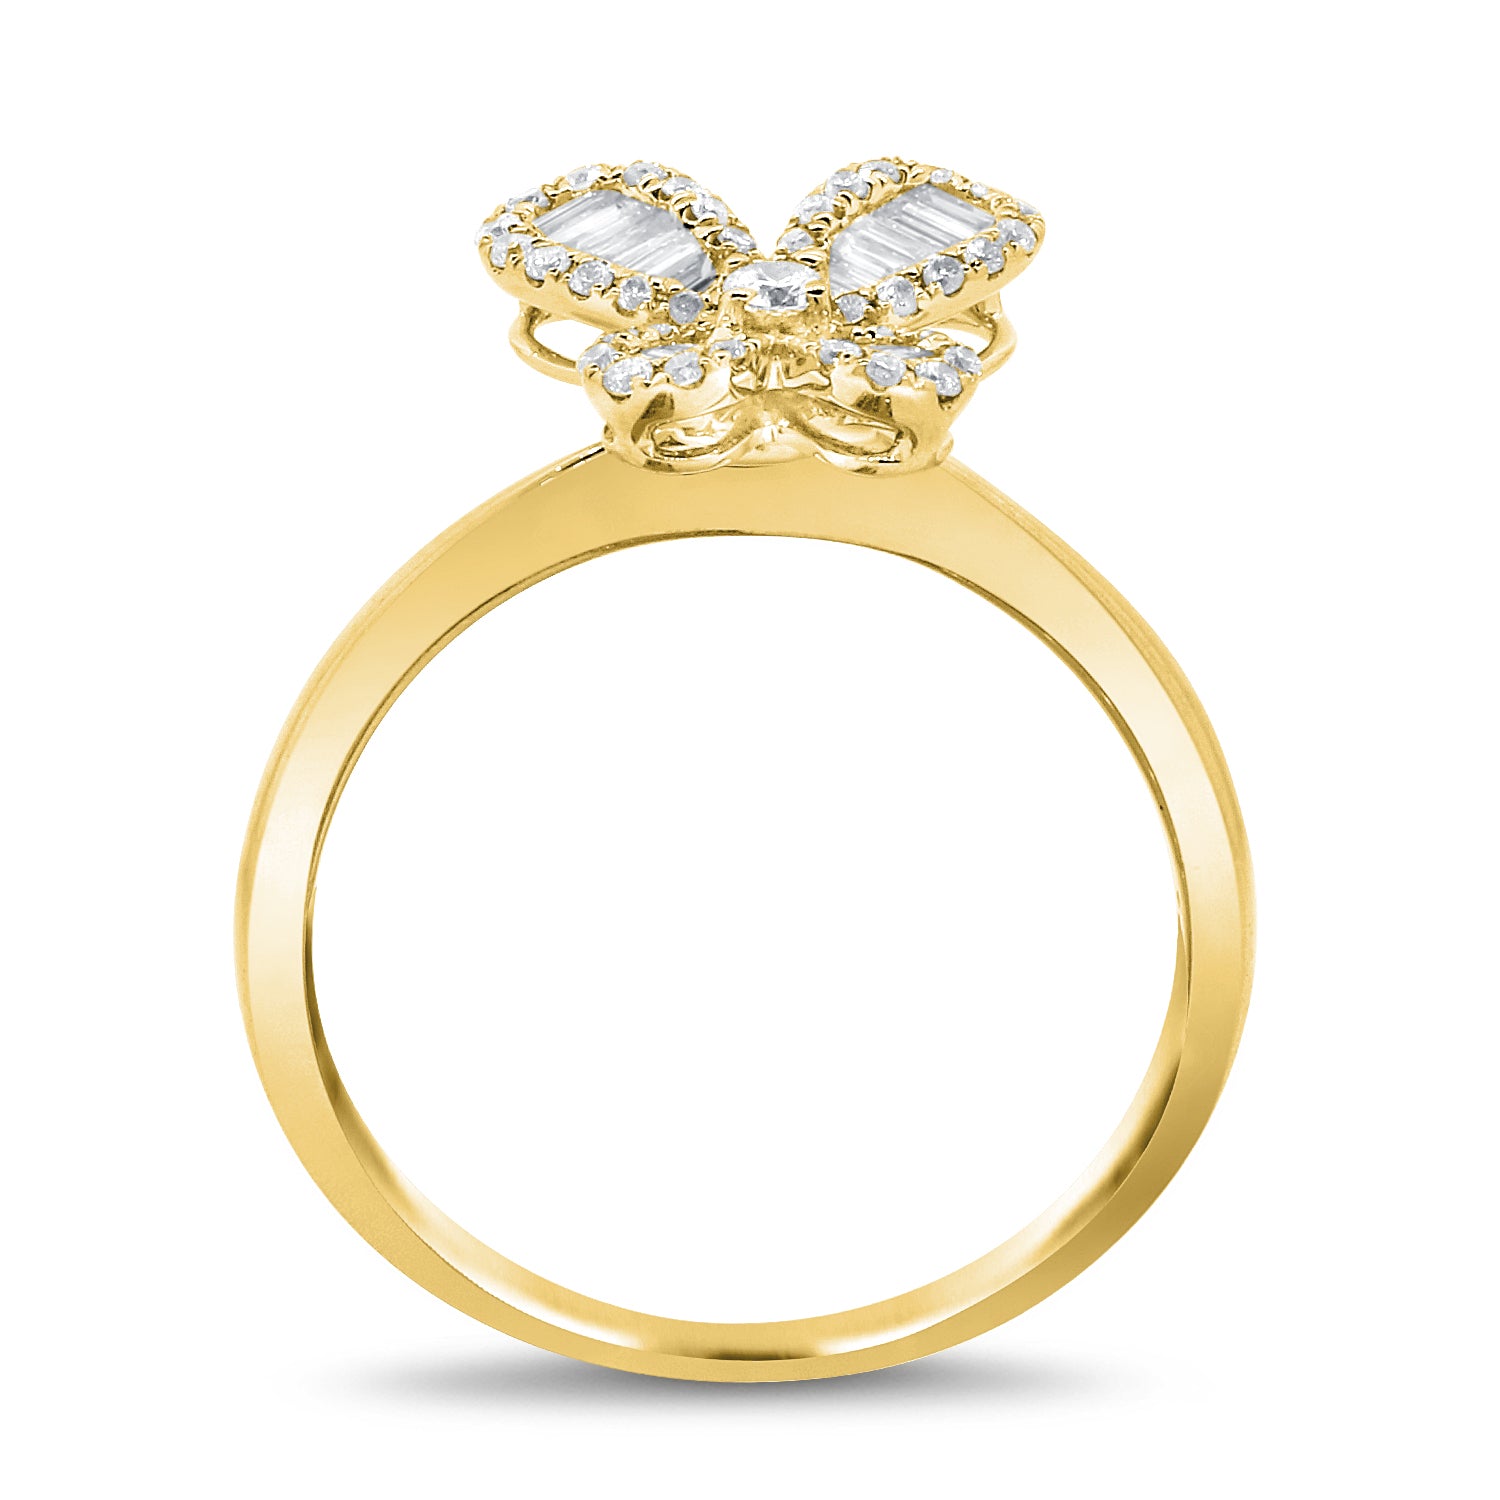 Buy Gold Rings for Women by TALISMAN Online | Ajio.com